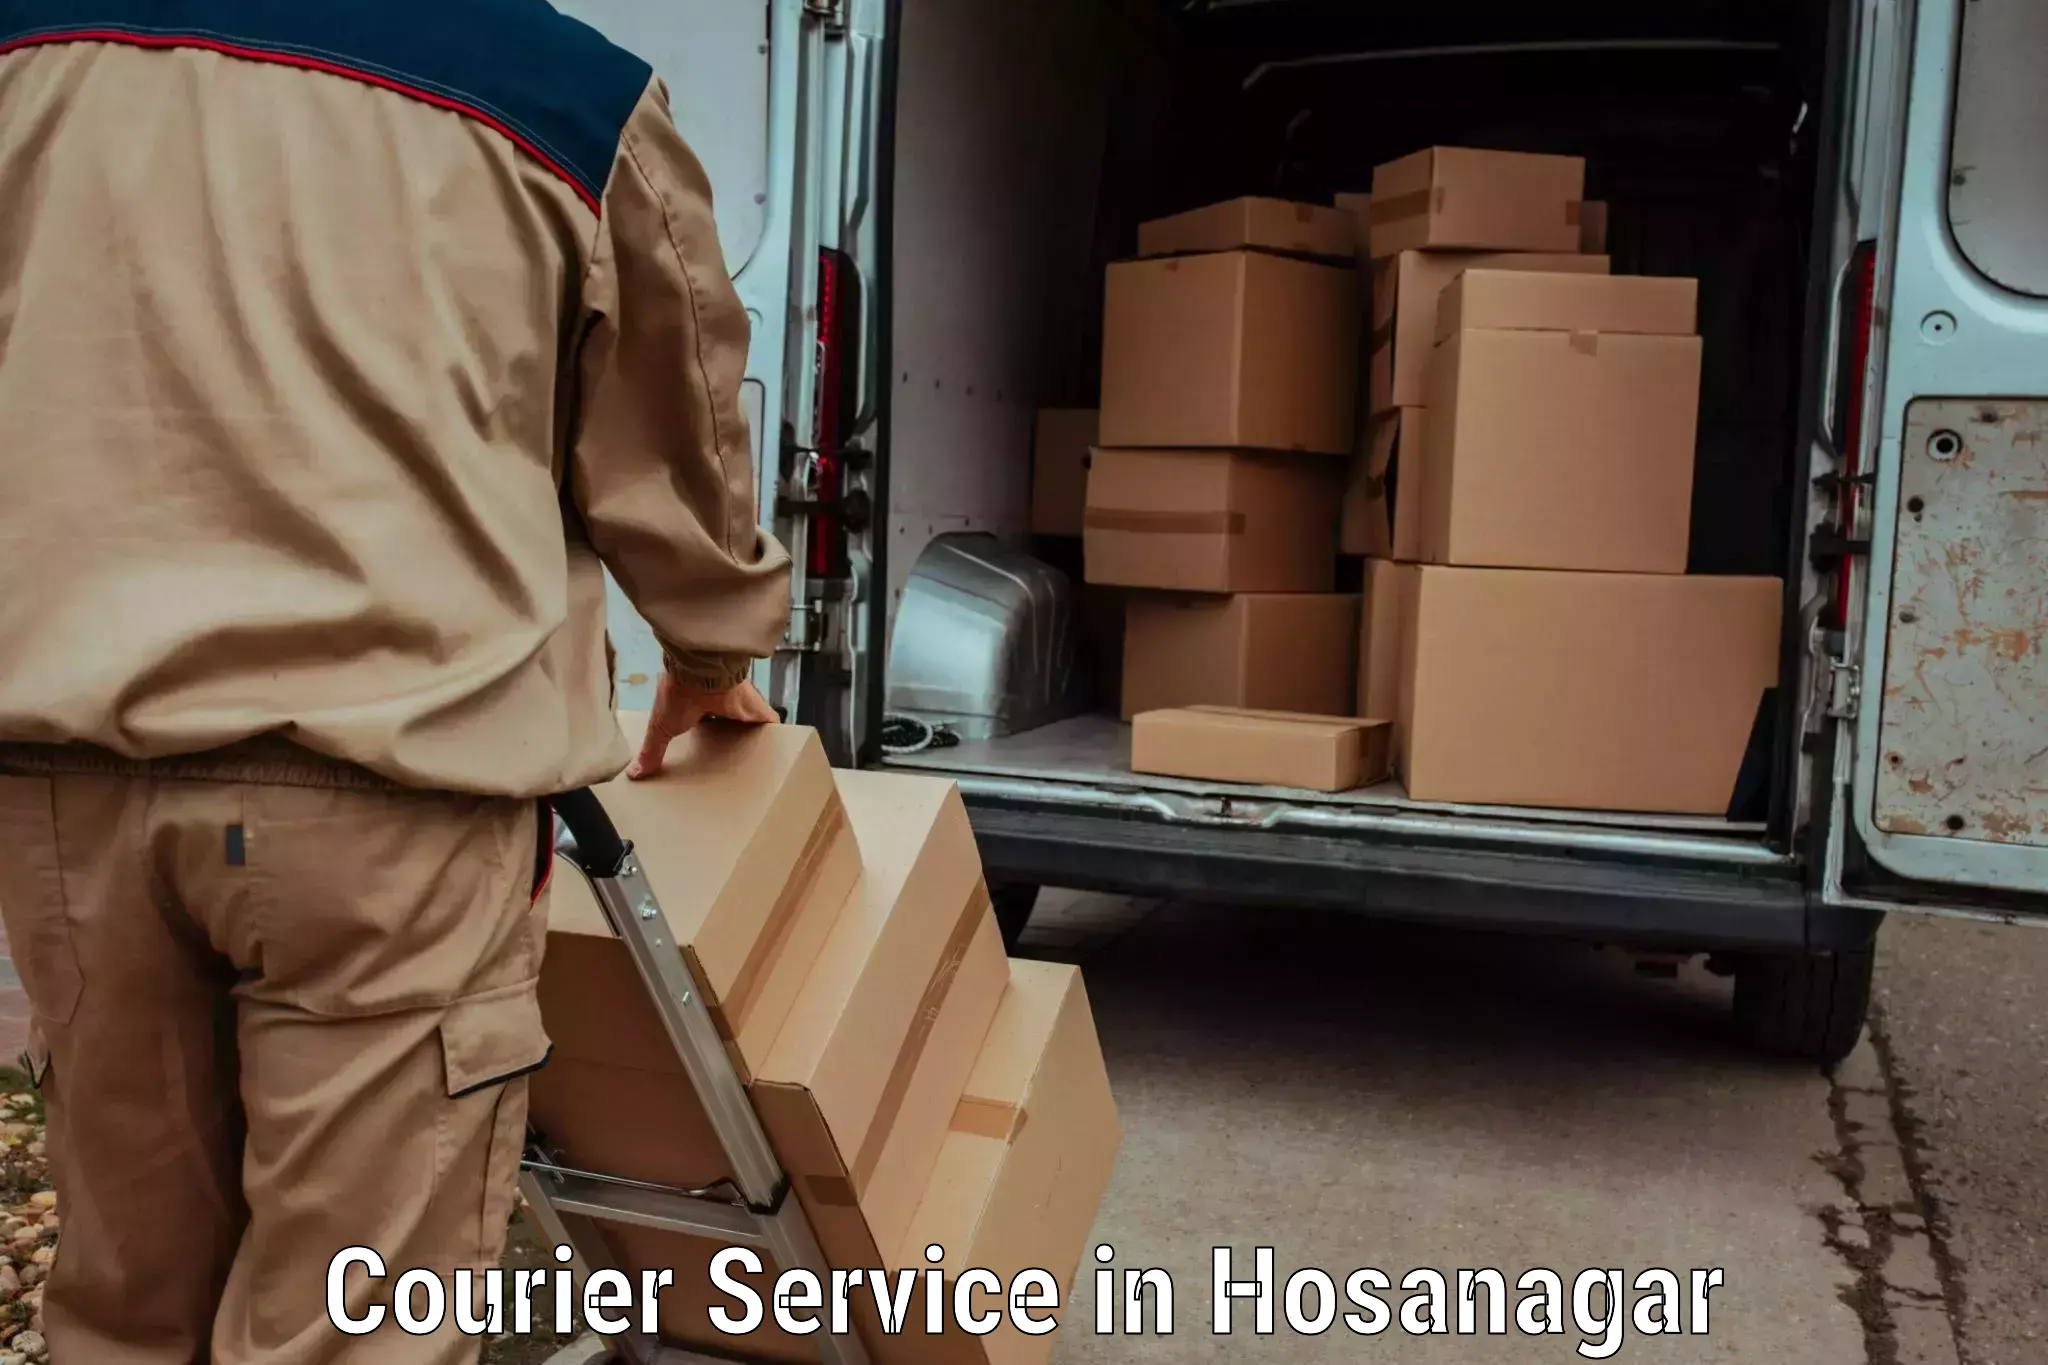 Expedited parcel delivery in Hosanagar